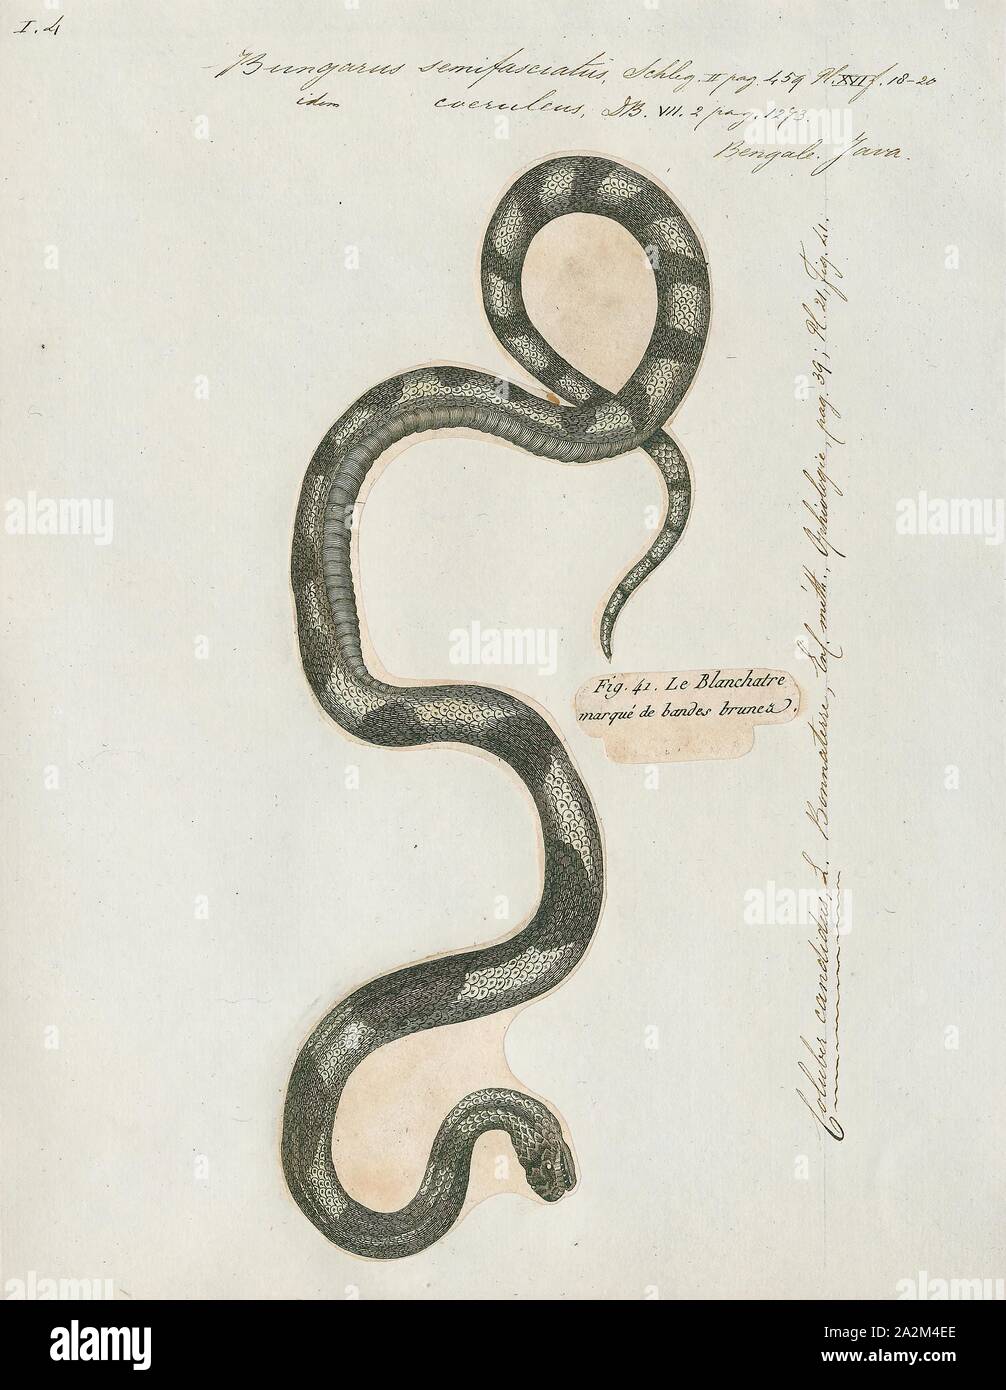 Bungarus semifasciatus, Print, Bungarus is a genus of venomous elapid snakes, the kraits, found in South and Southeast Asia. The genus Bungarus has 15 species., 1700-1880 Stock Photo